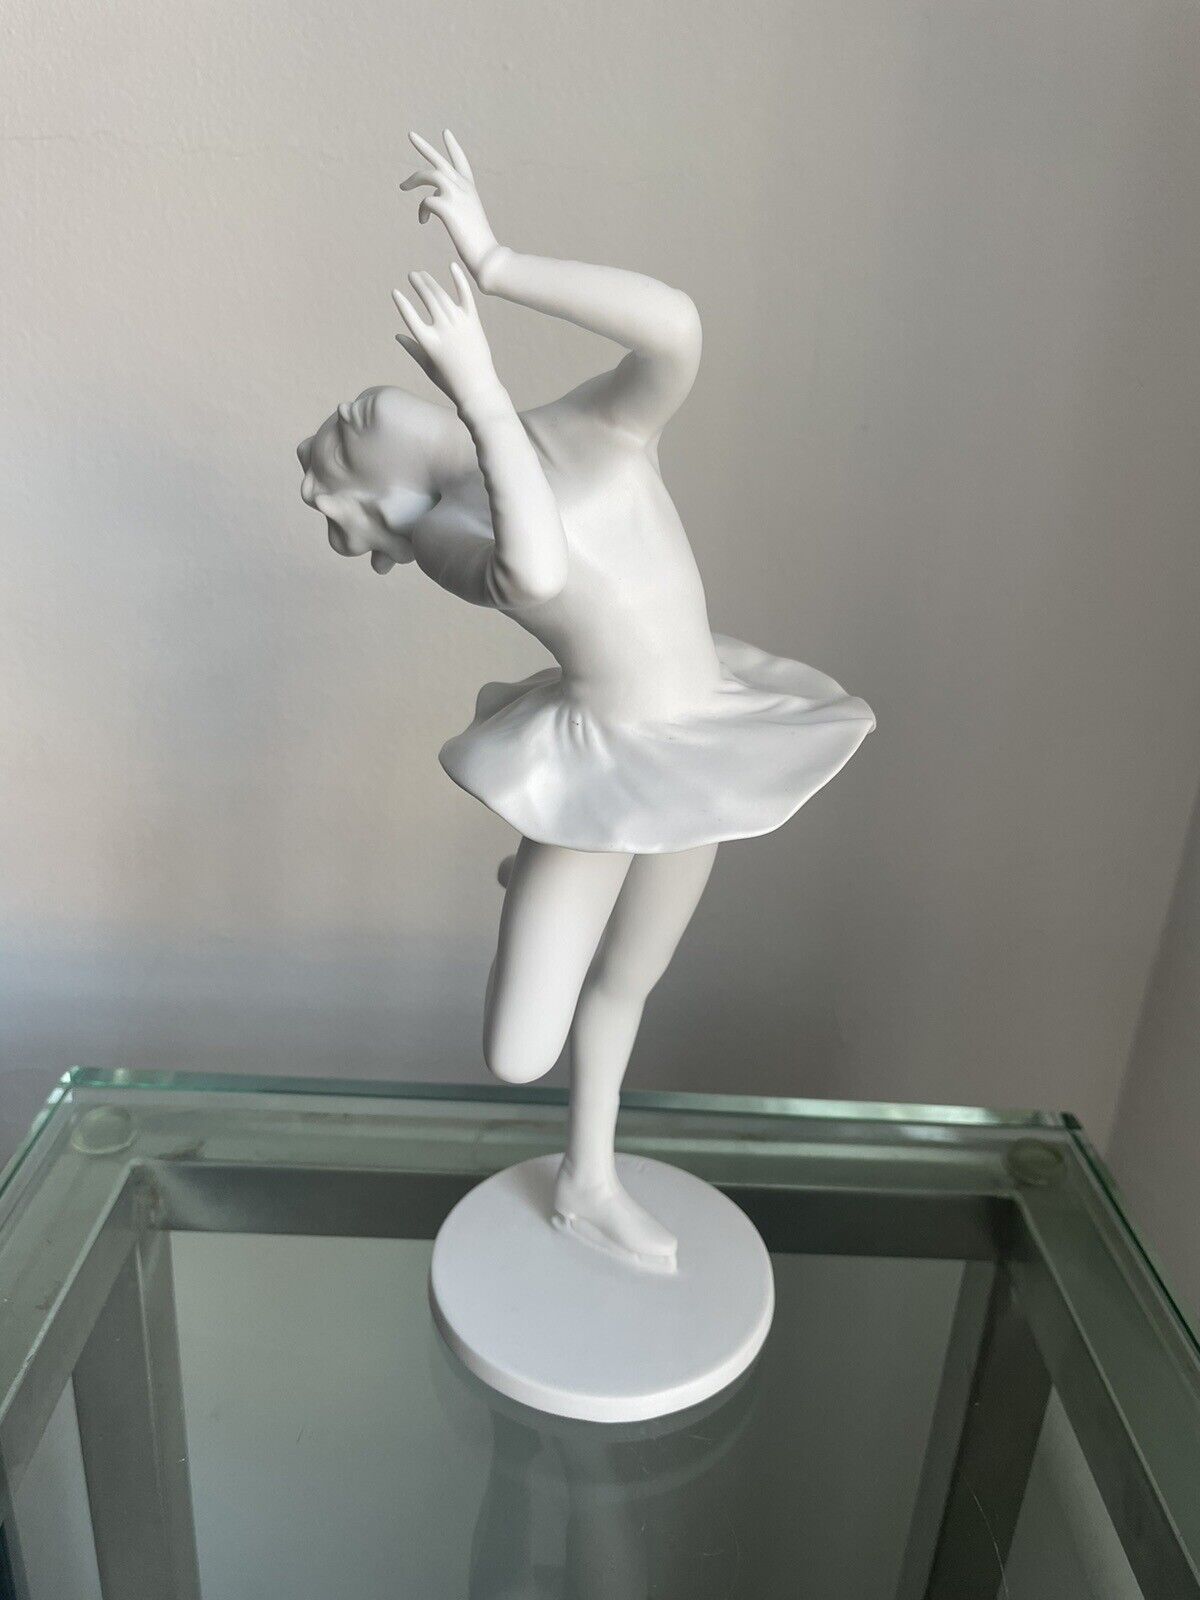 Kaiser collectible figurine “Figure Skating Girl”